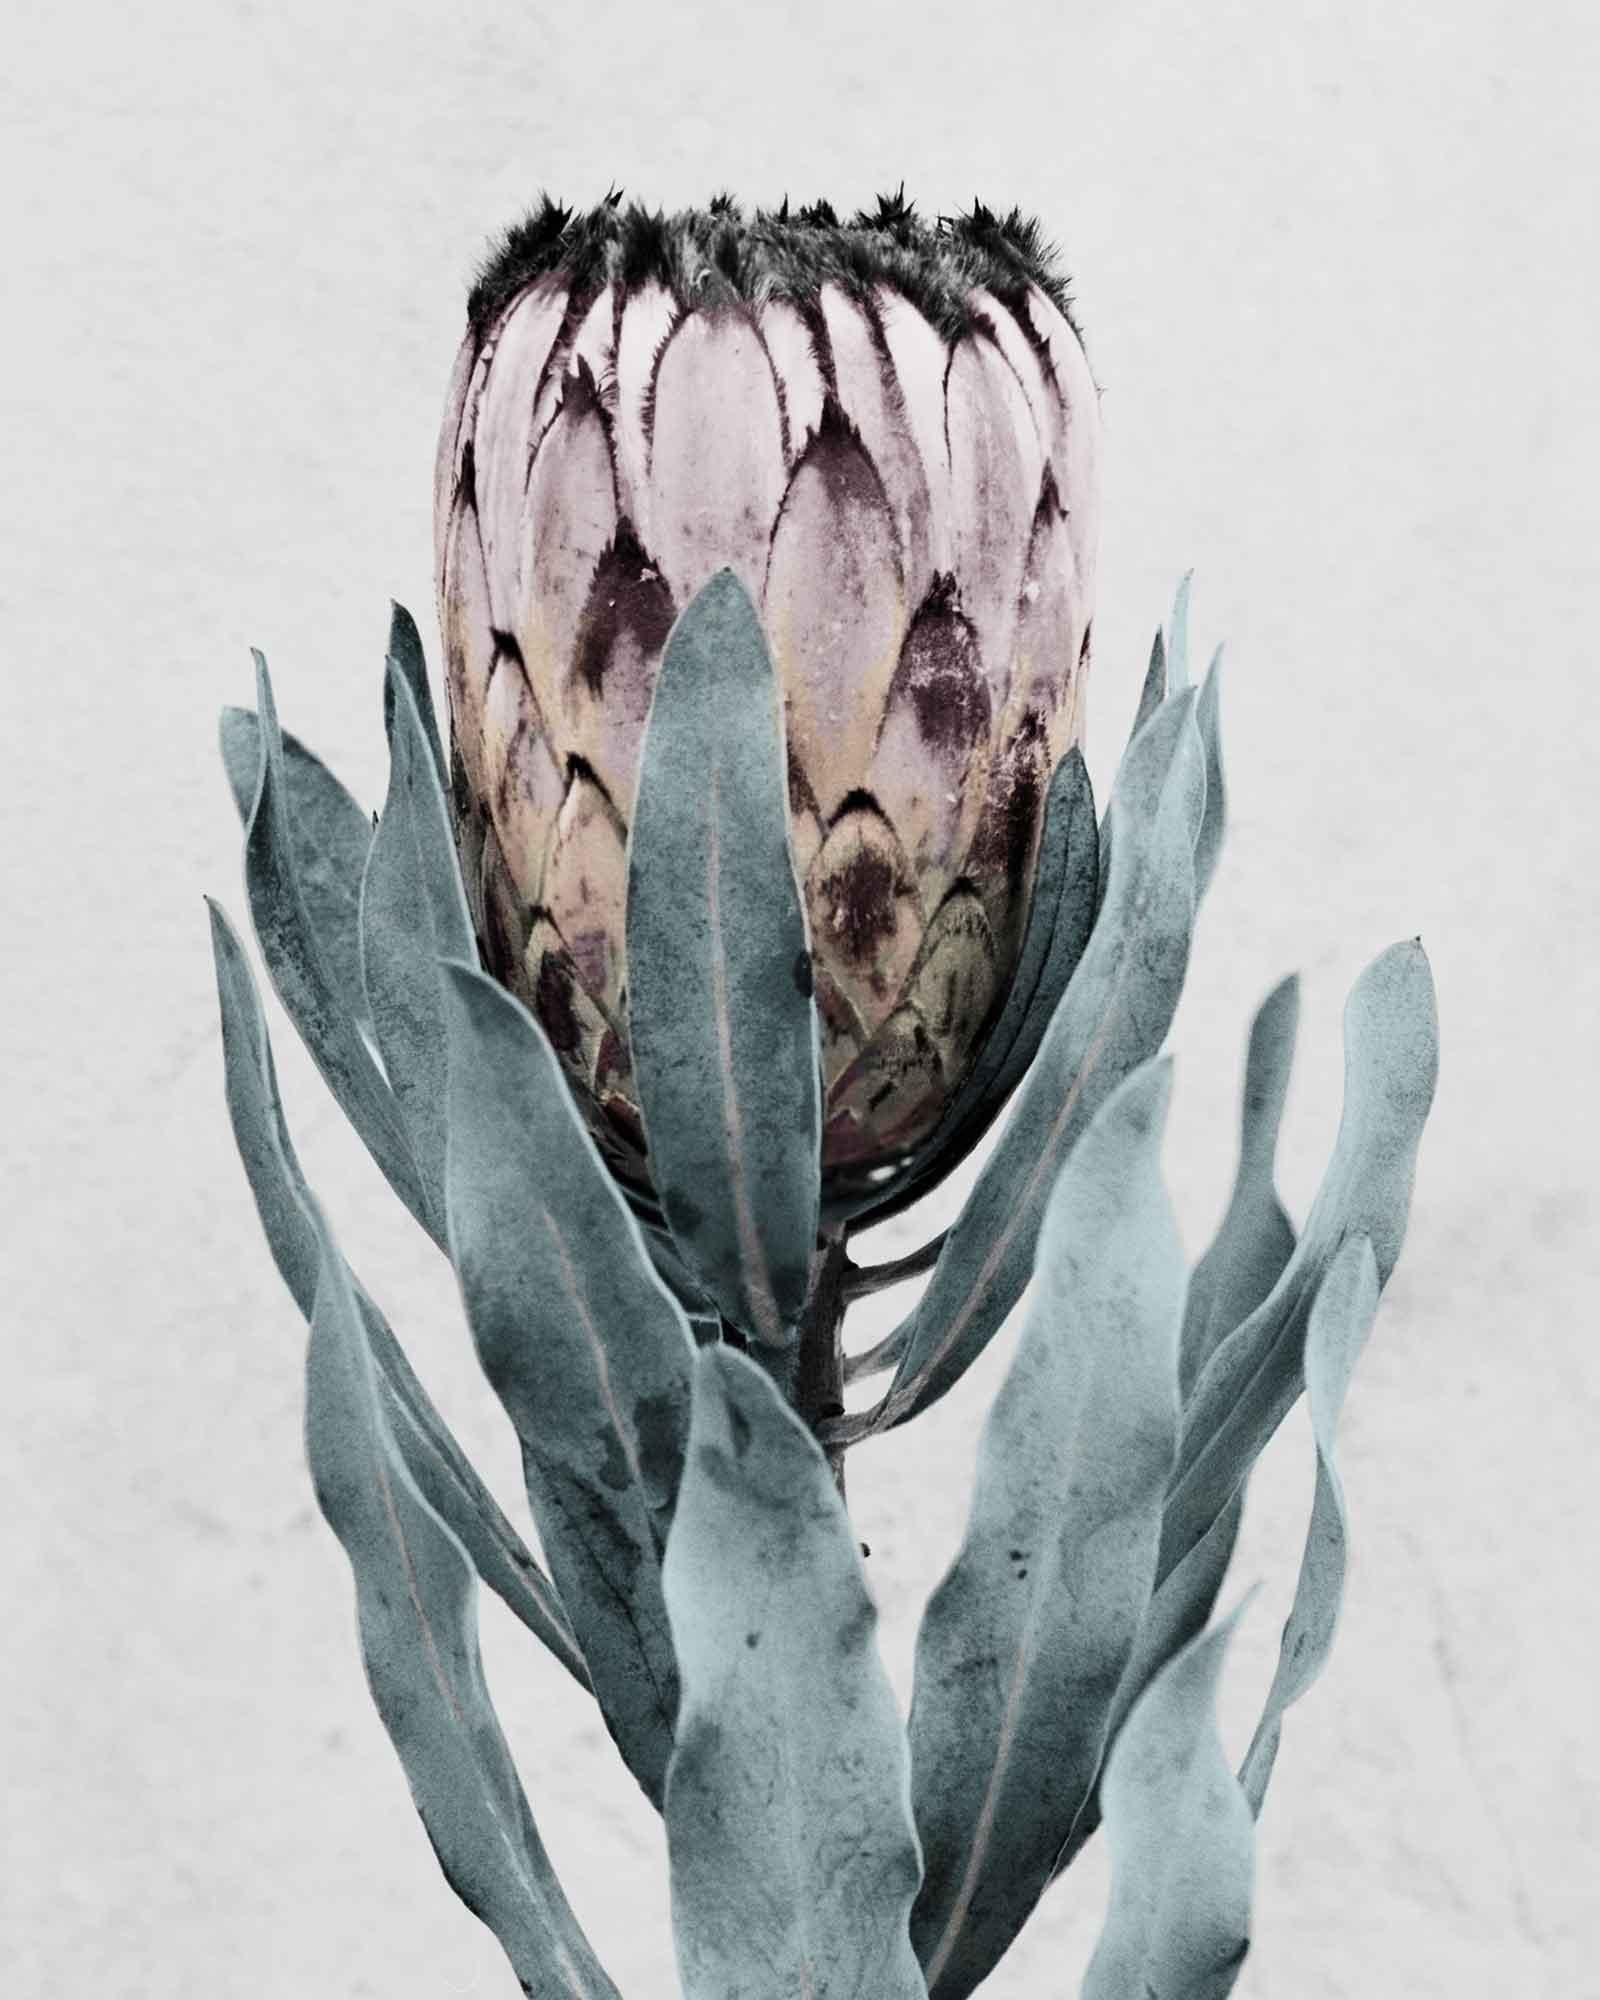 Botanica #17 (Protea Cynaroides) - Photograph de Vee Speers